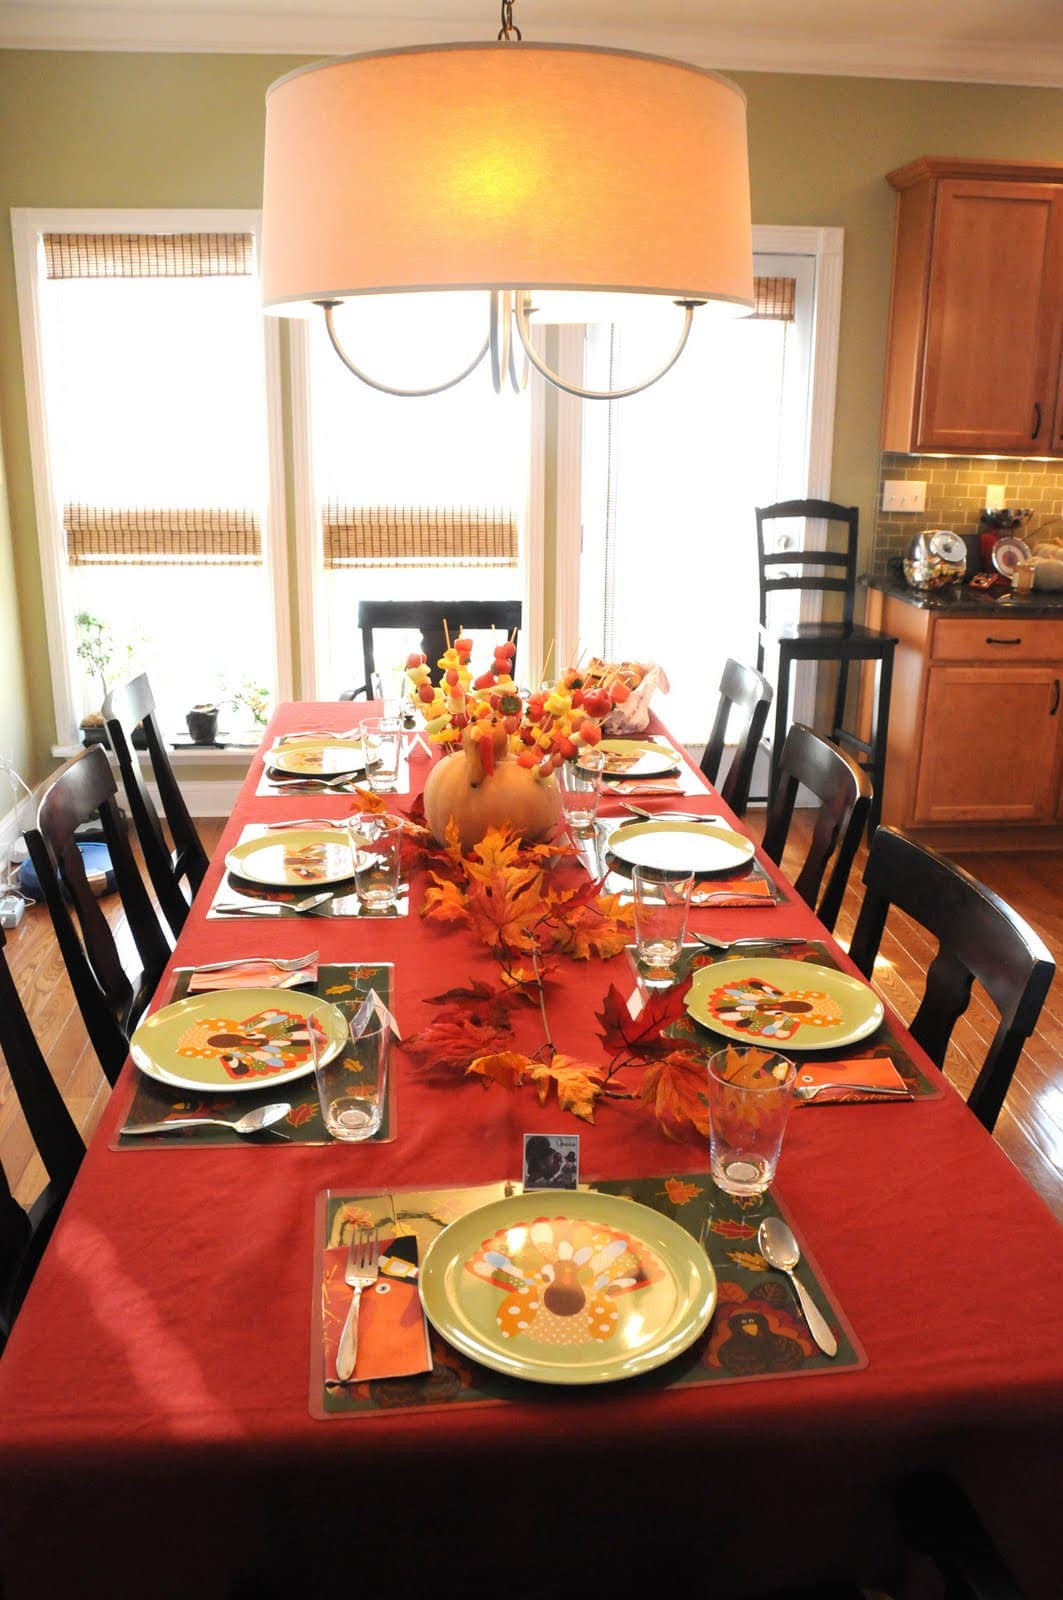 Thanksgiving Table Ideas
 Thanksgiving Decor The Polkadot Chair